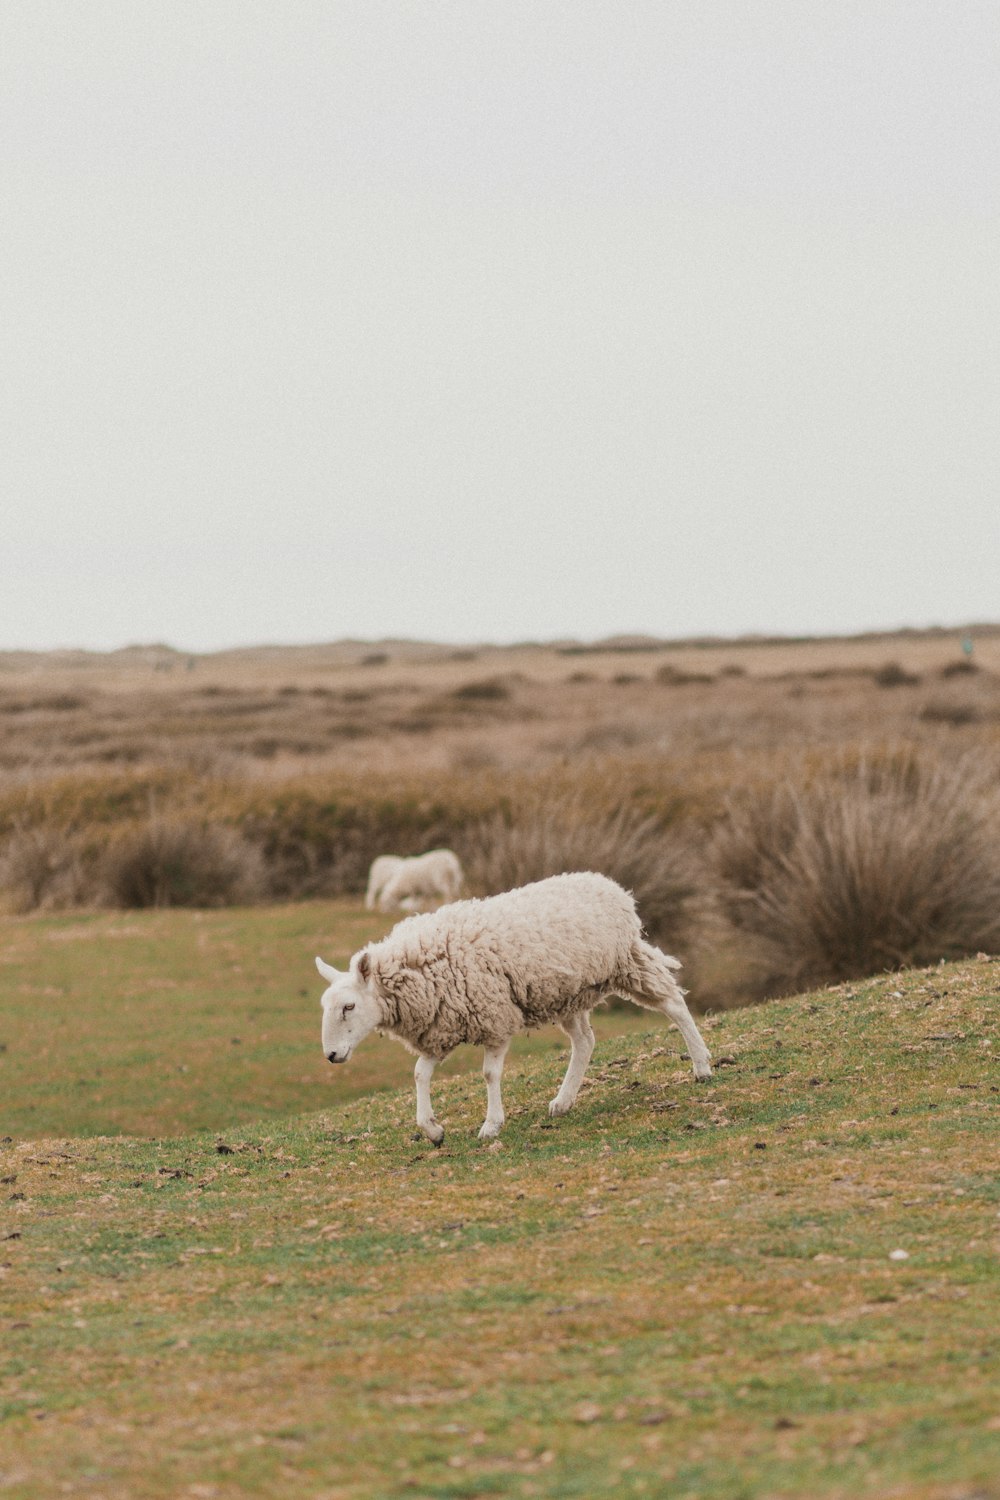 a sheep walking across a grass covered field